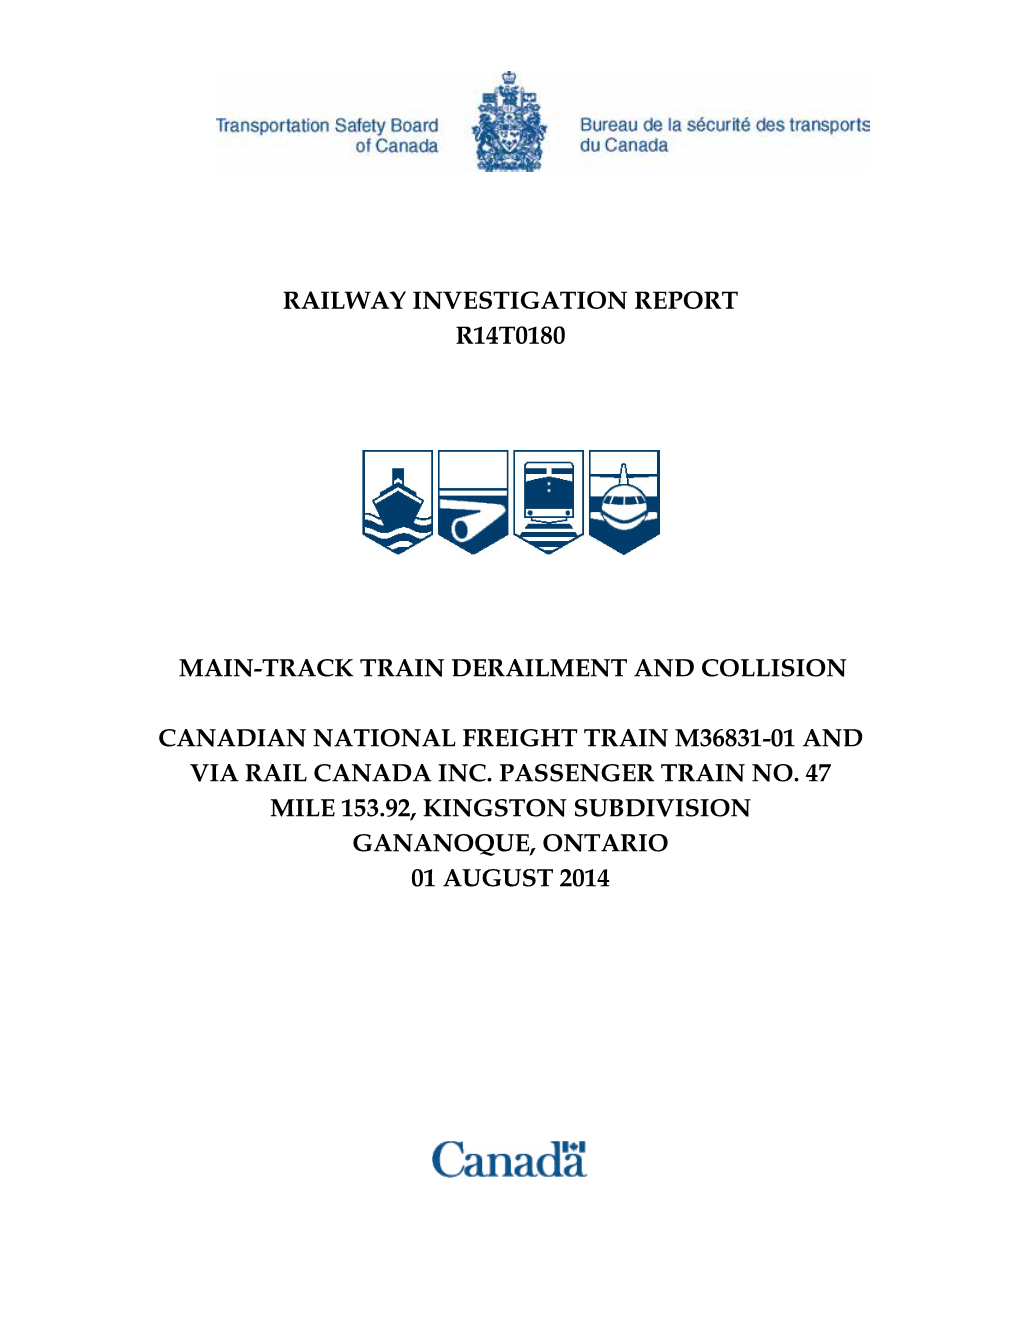 Railway Investigation Report R14t0180